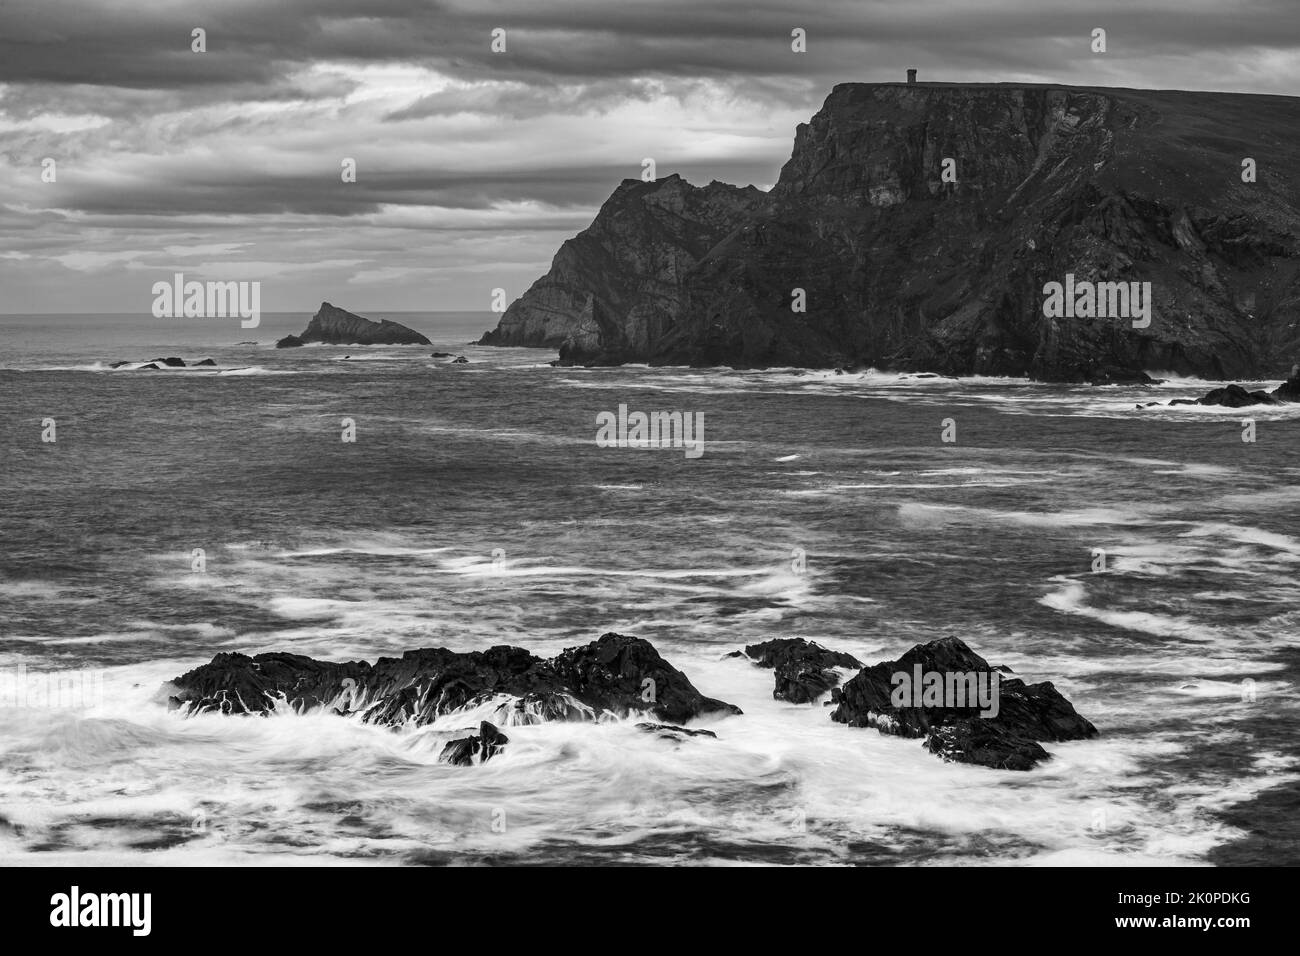 The Cliff and Coast of Ireland Stock Photo